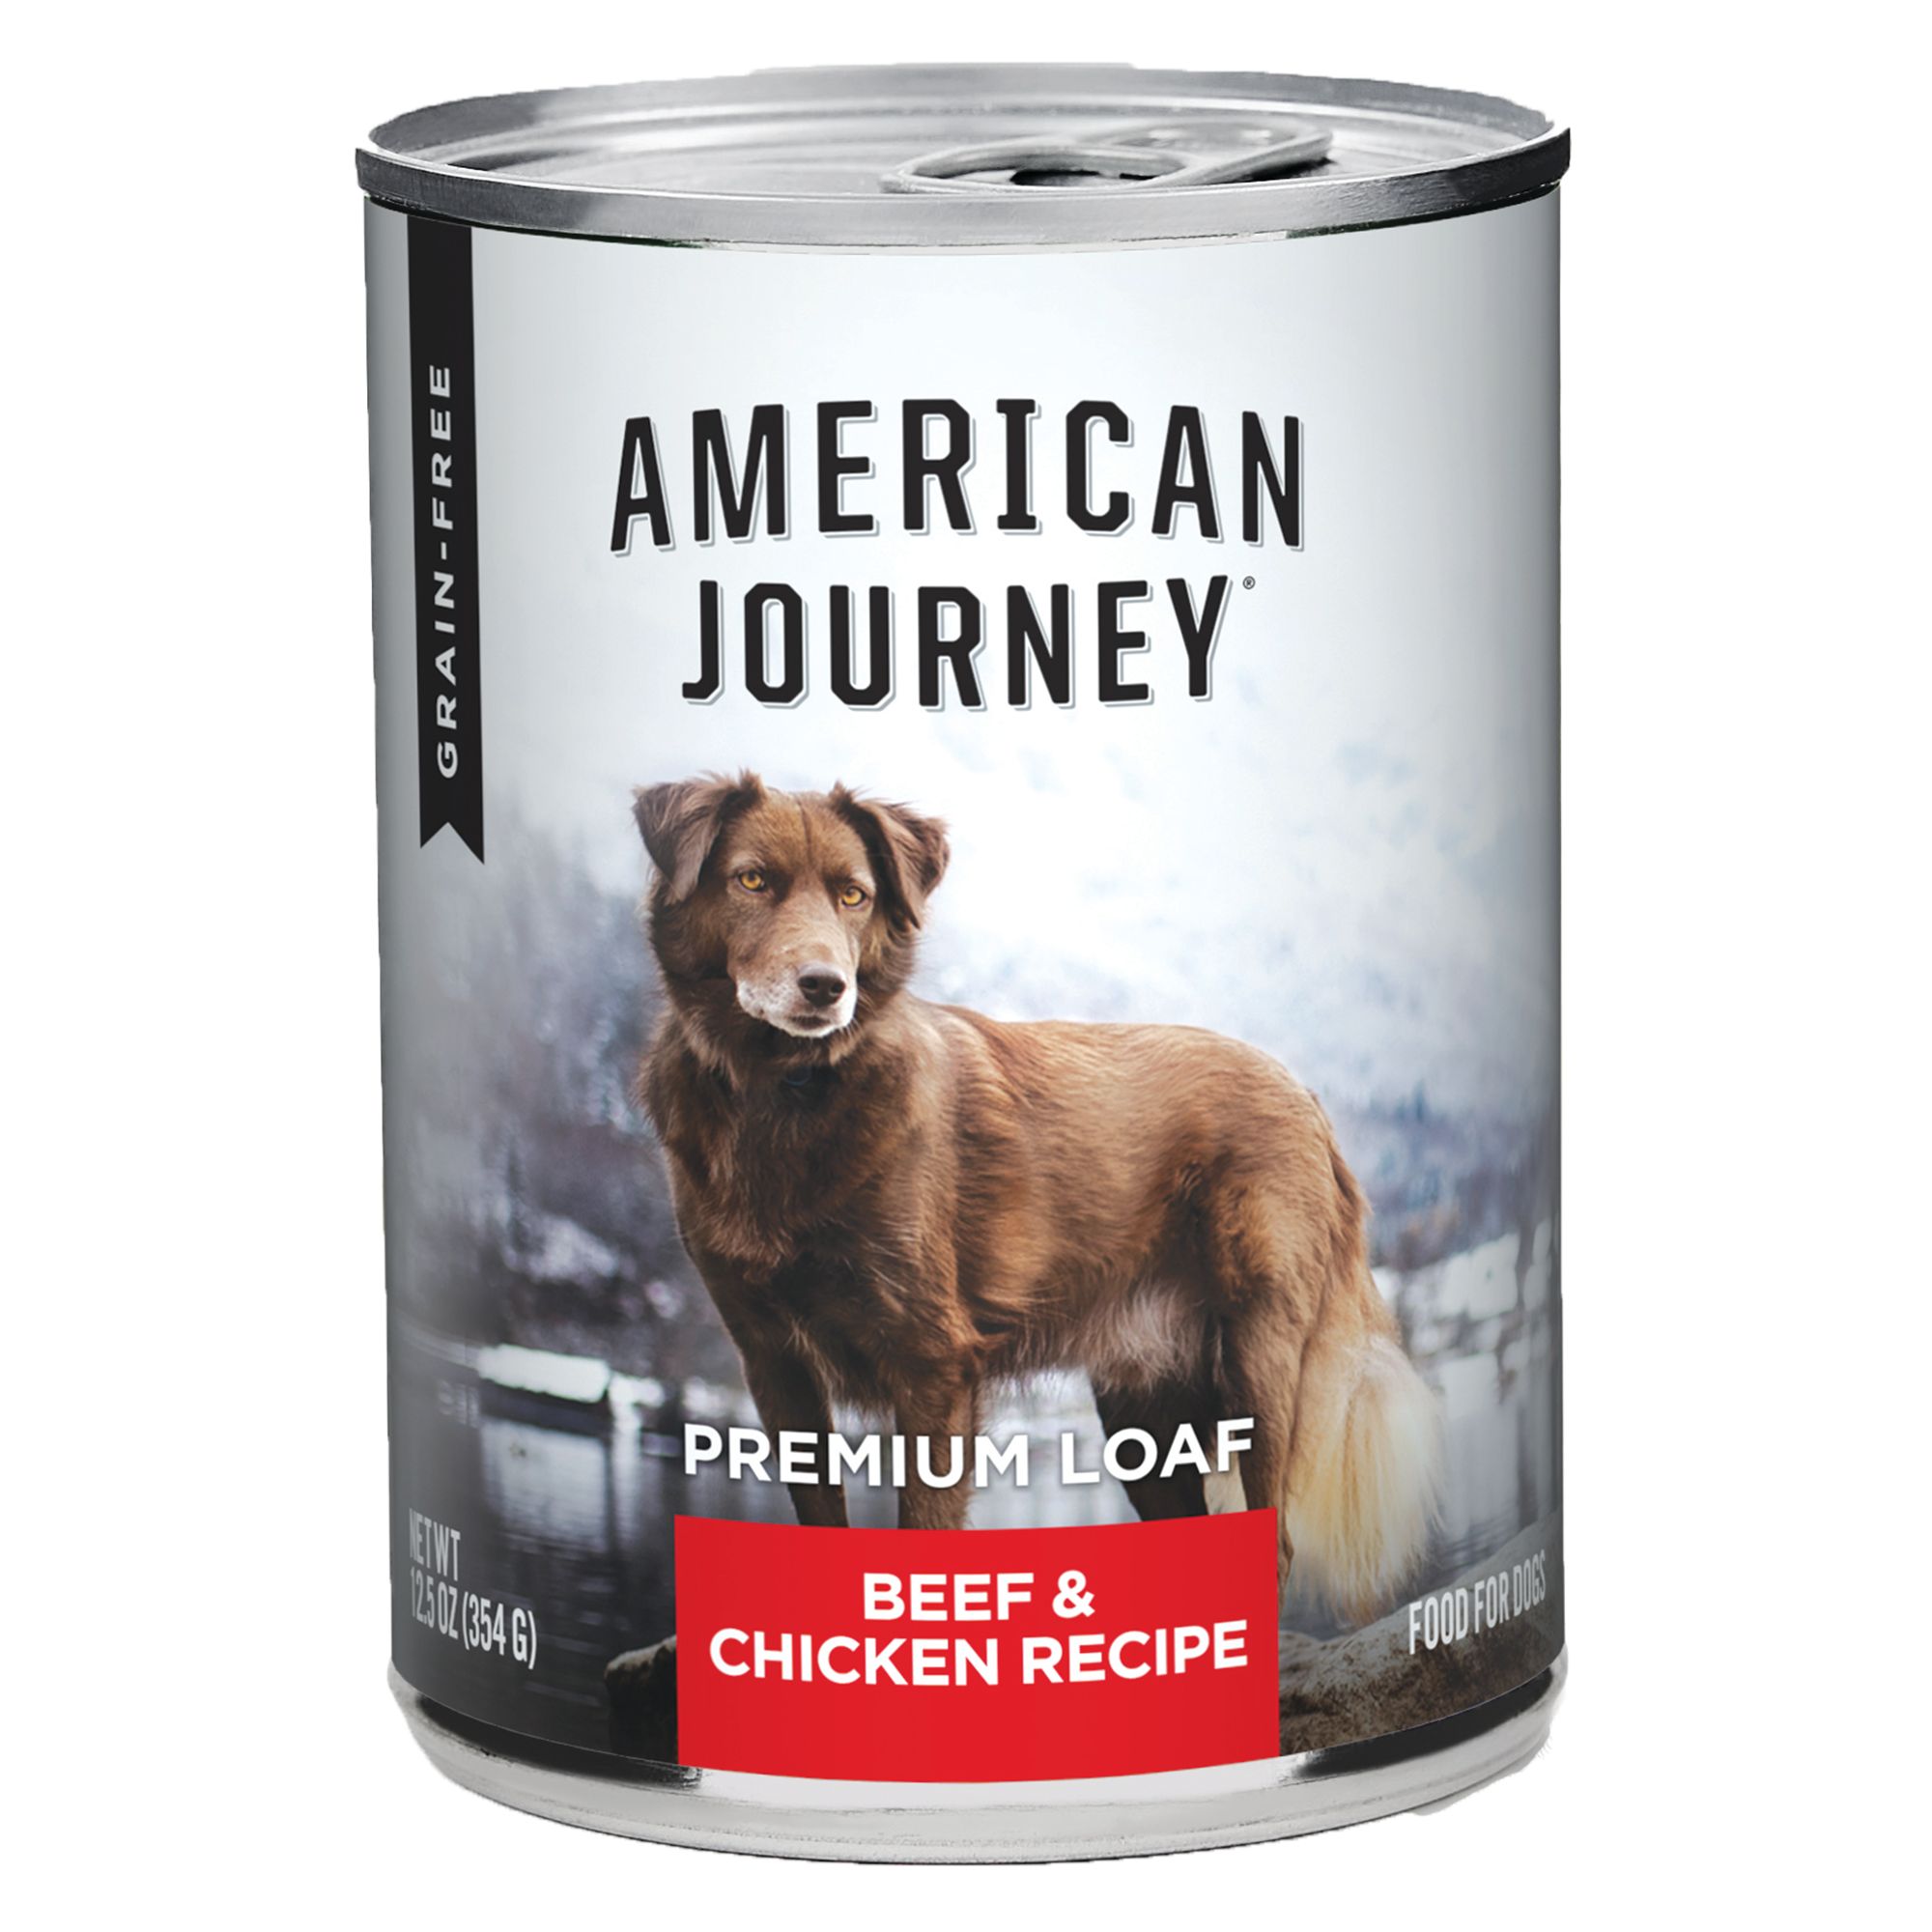 American Journey Dog Food | PetSmart